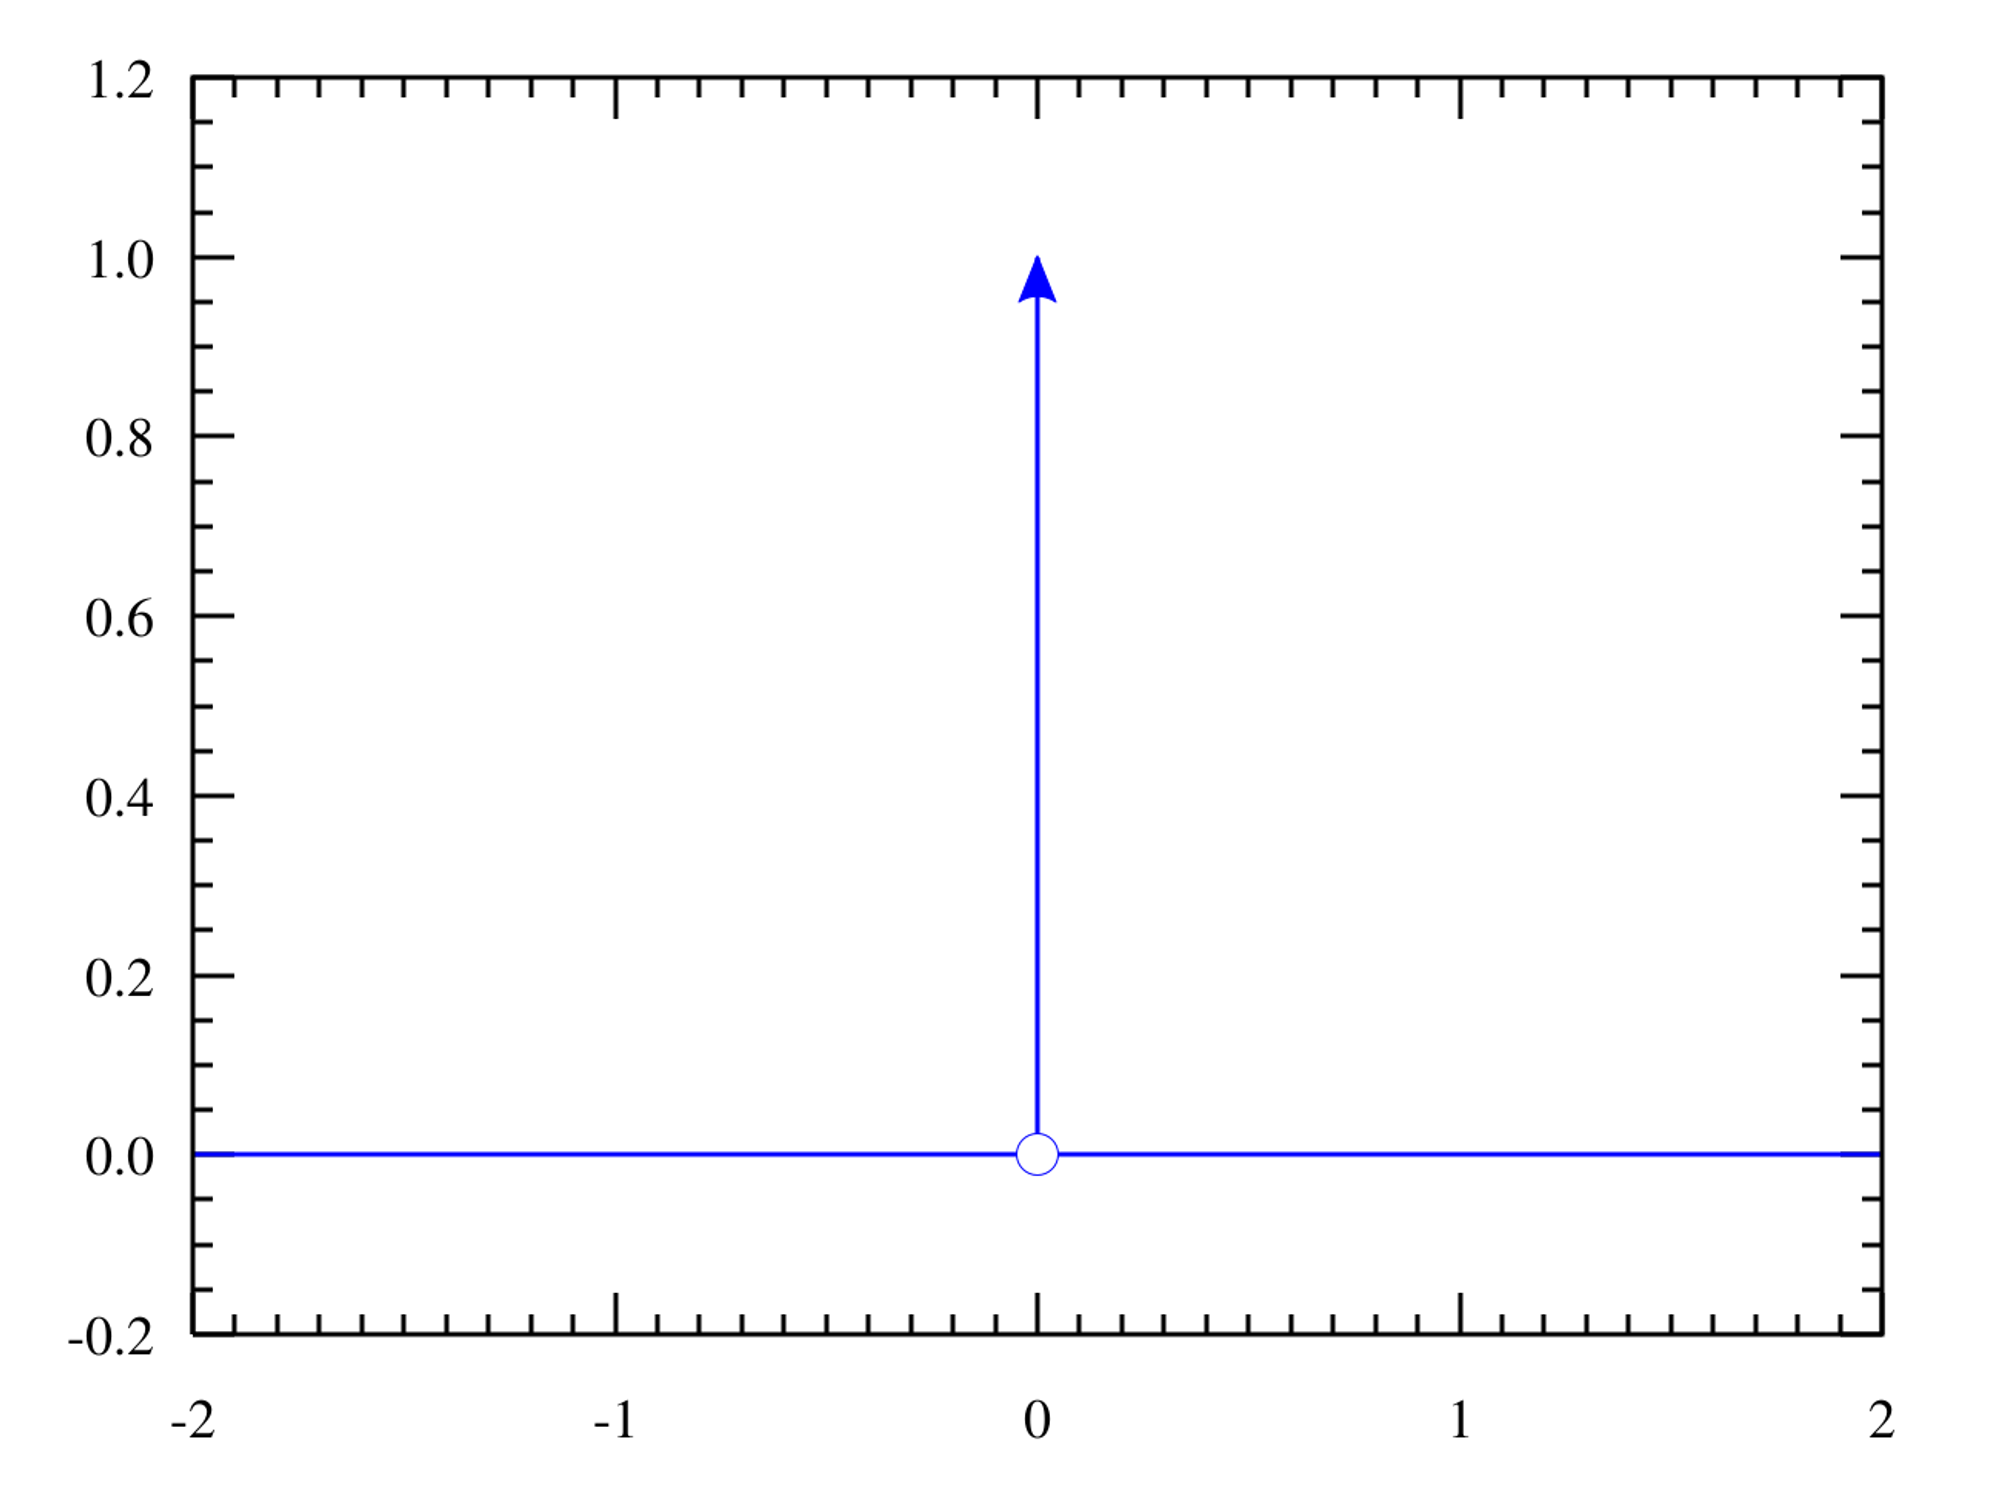 Dirac delta function